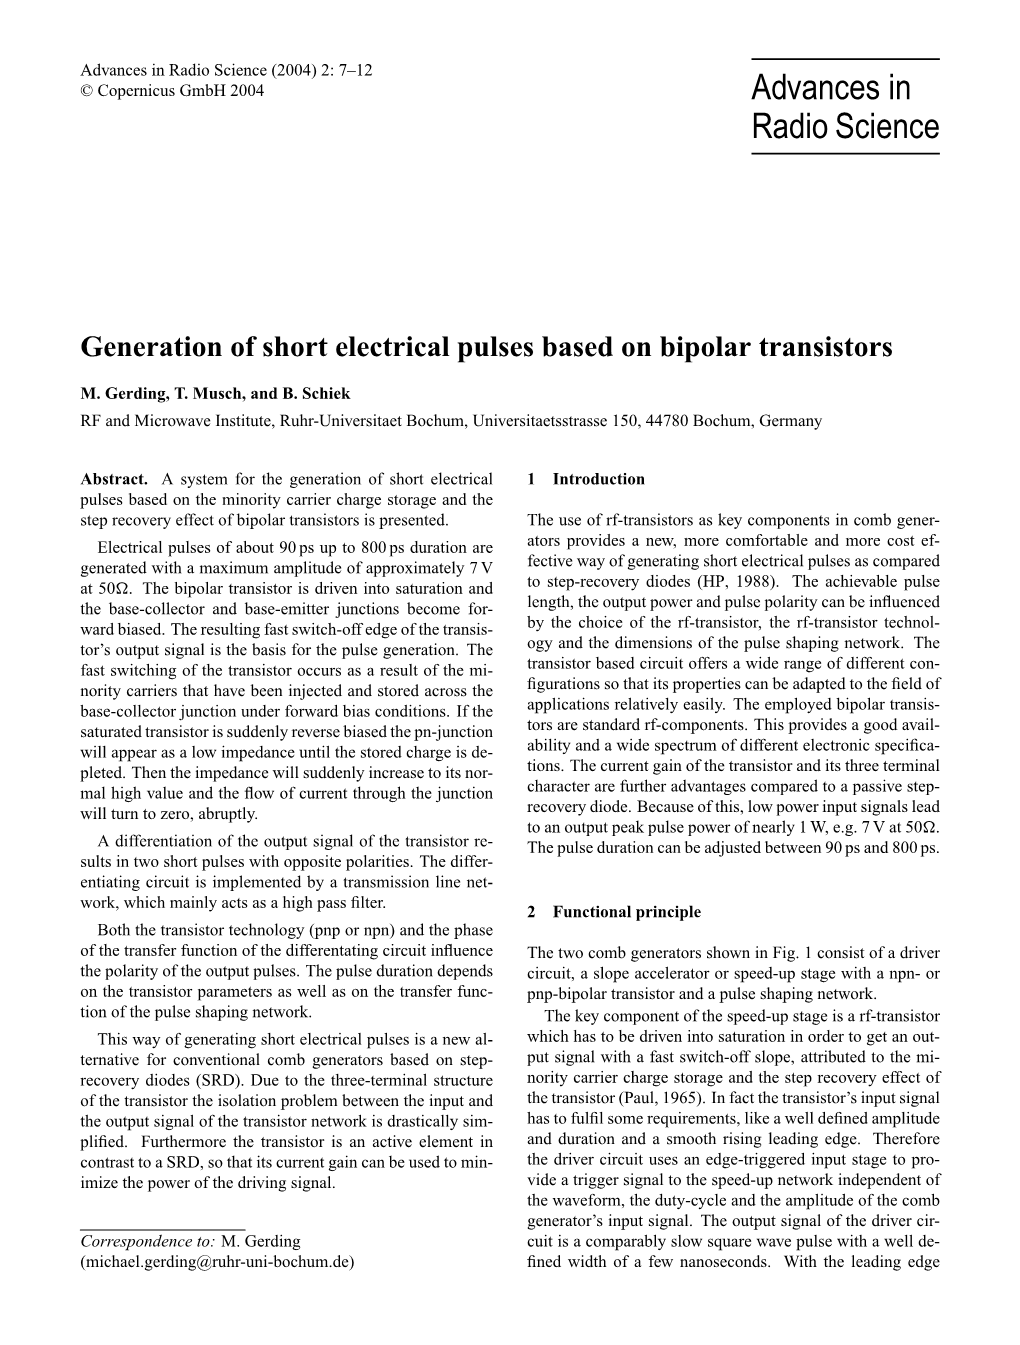 Generation of Short Electrical Pulses Based on Bipolar Transistors